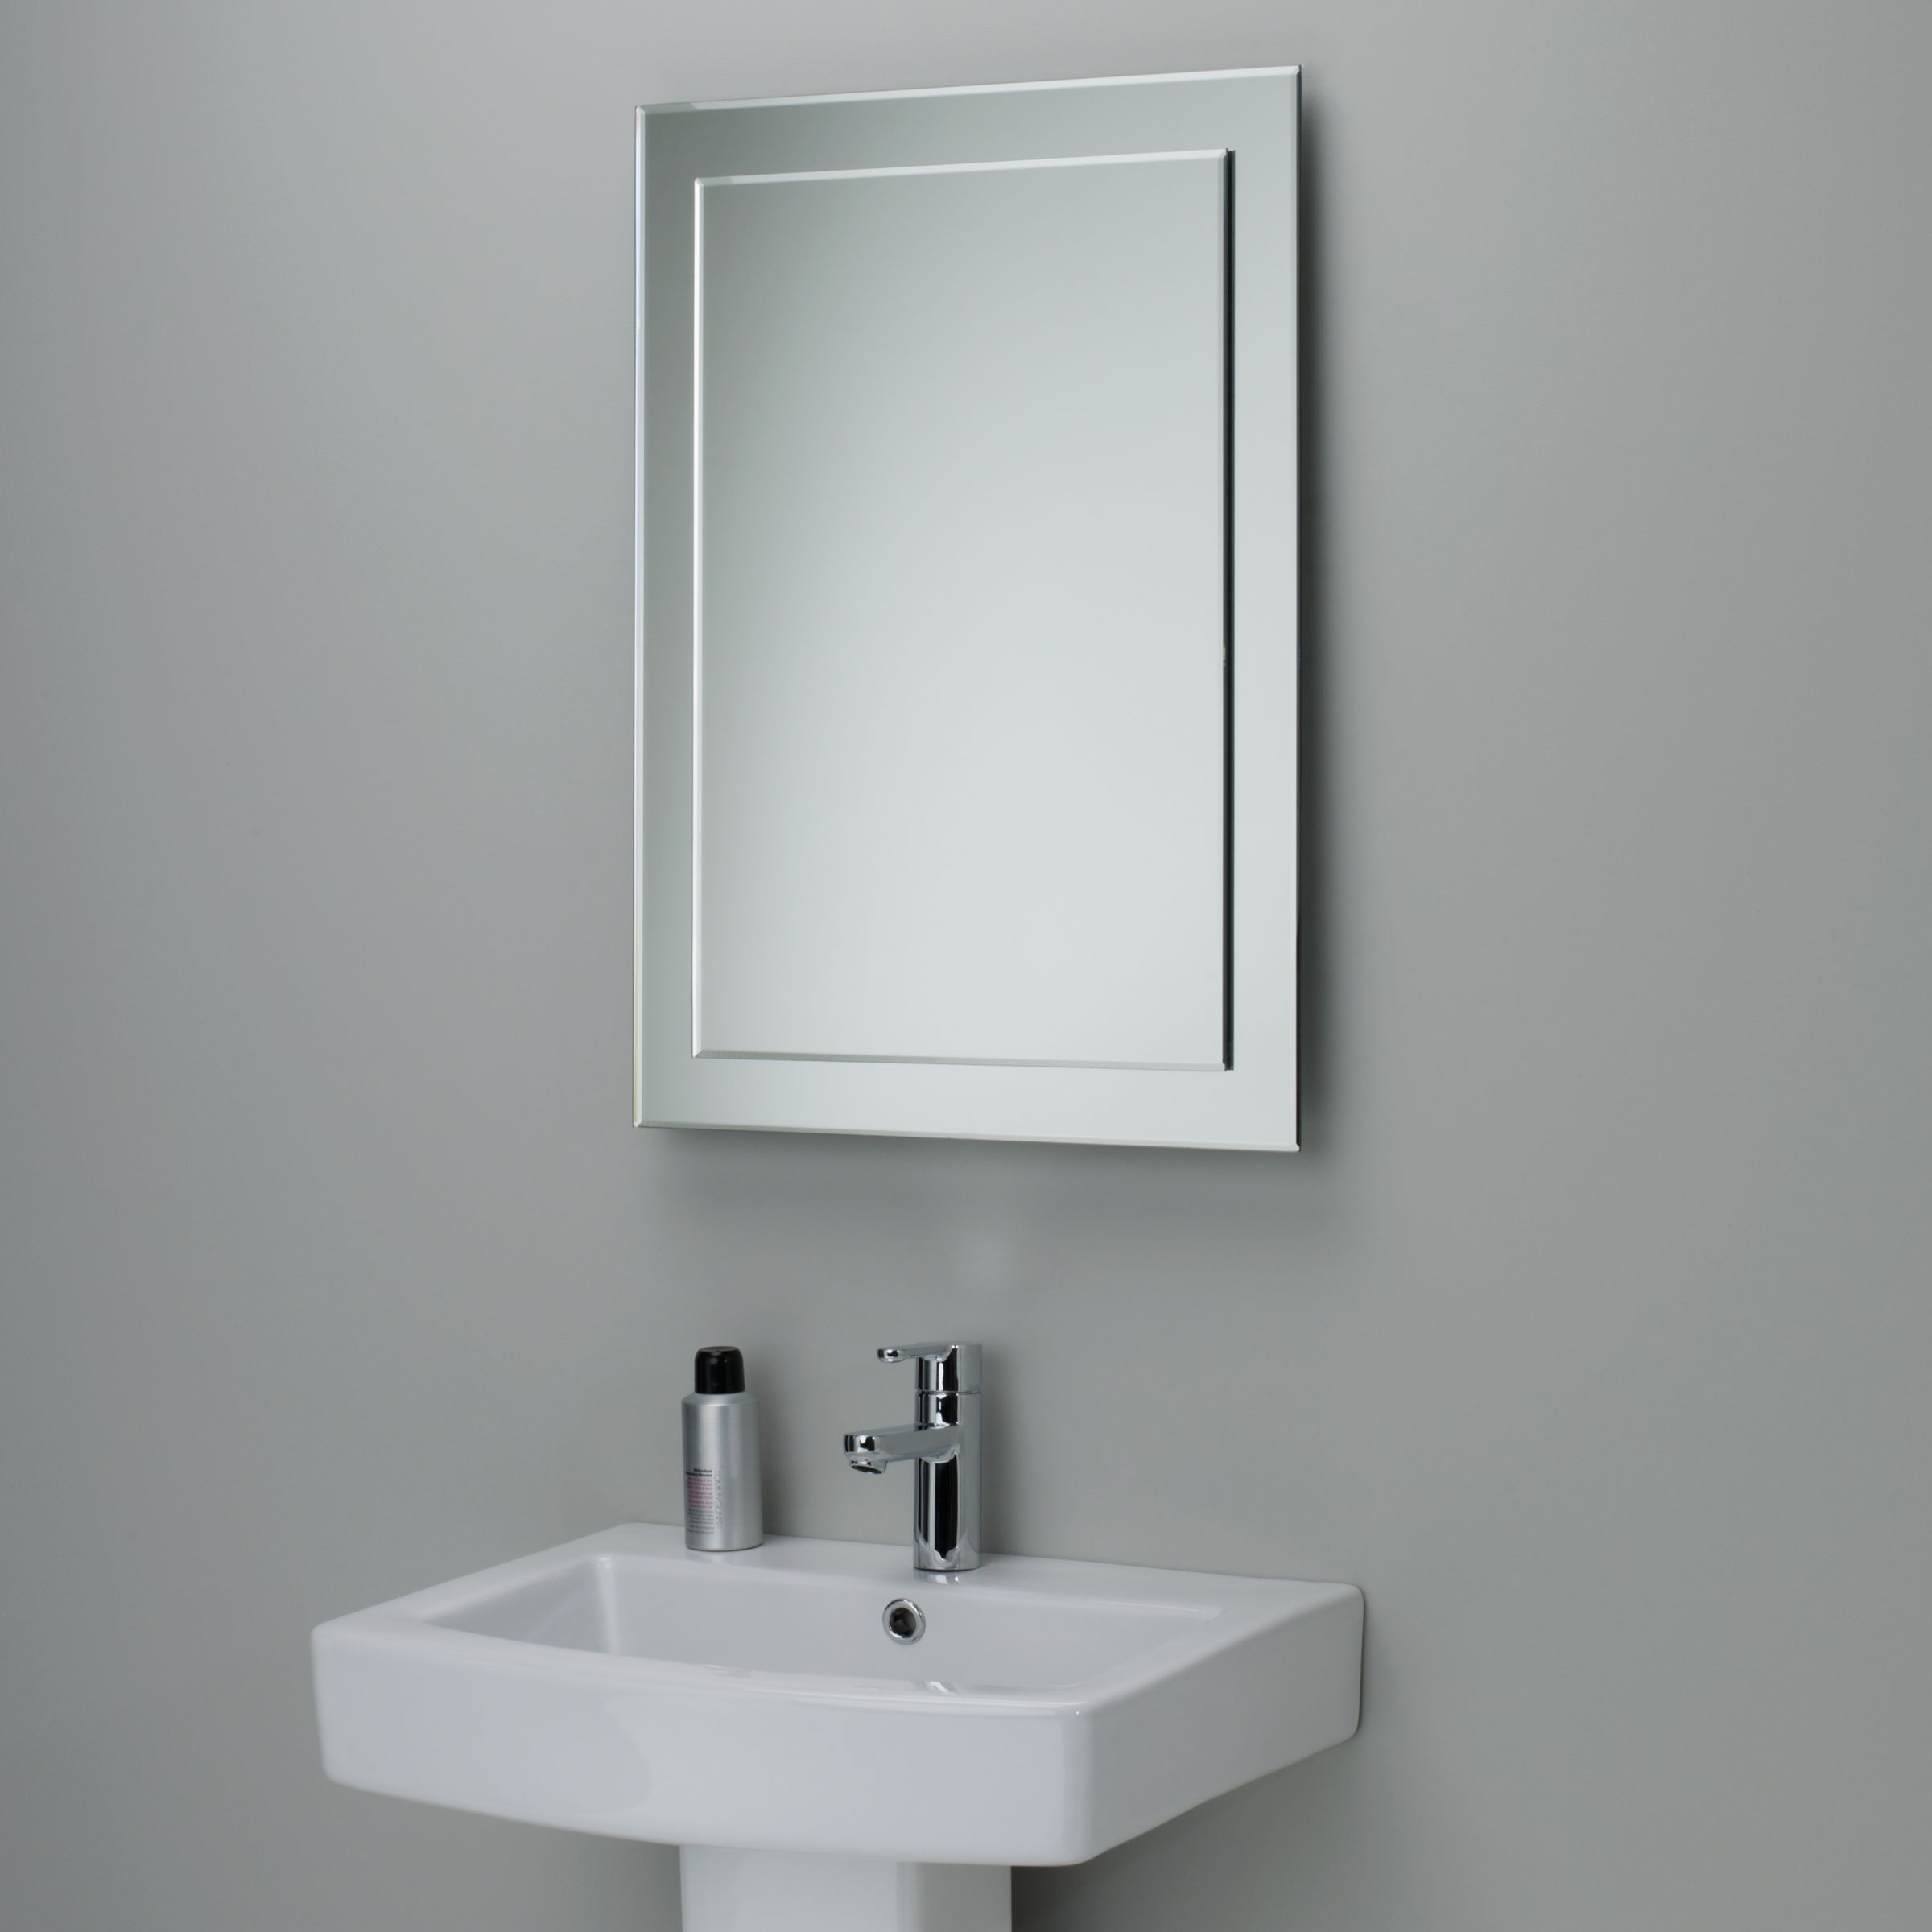  John  Lewis  Duo Wall Bathroom Mirror 70 x 50cm at John  Lewis 